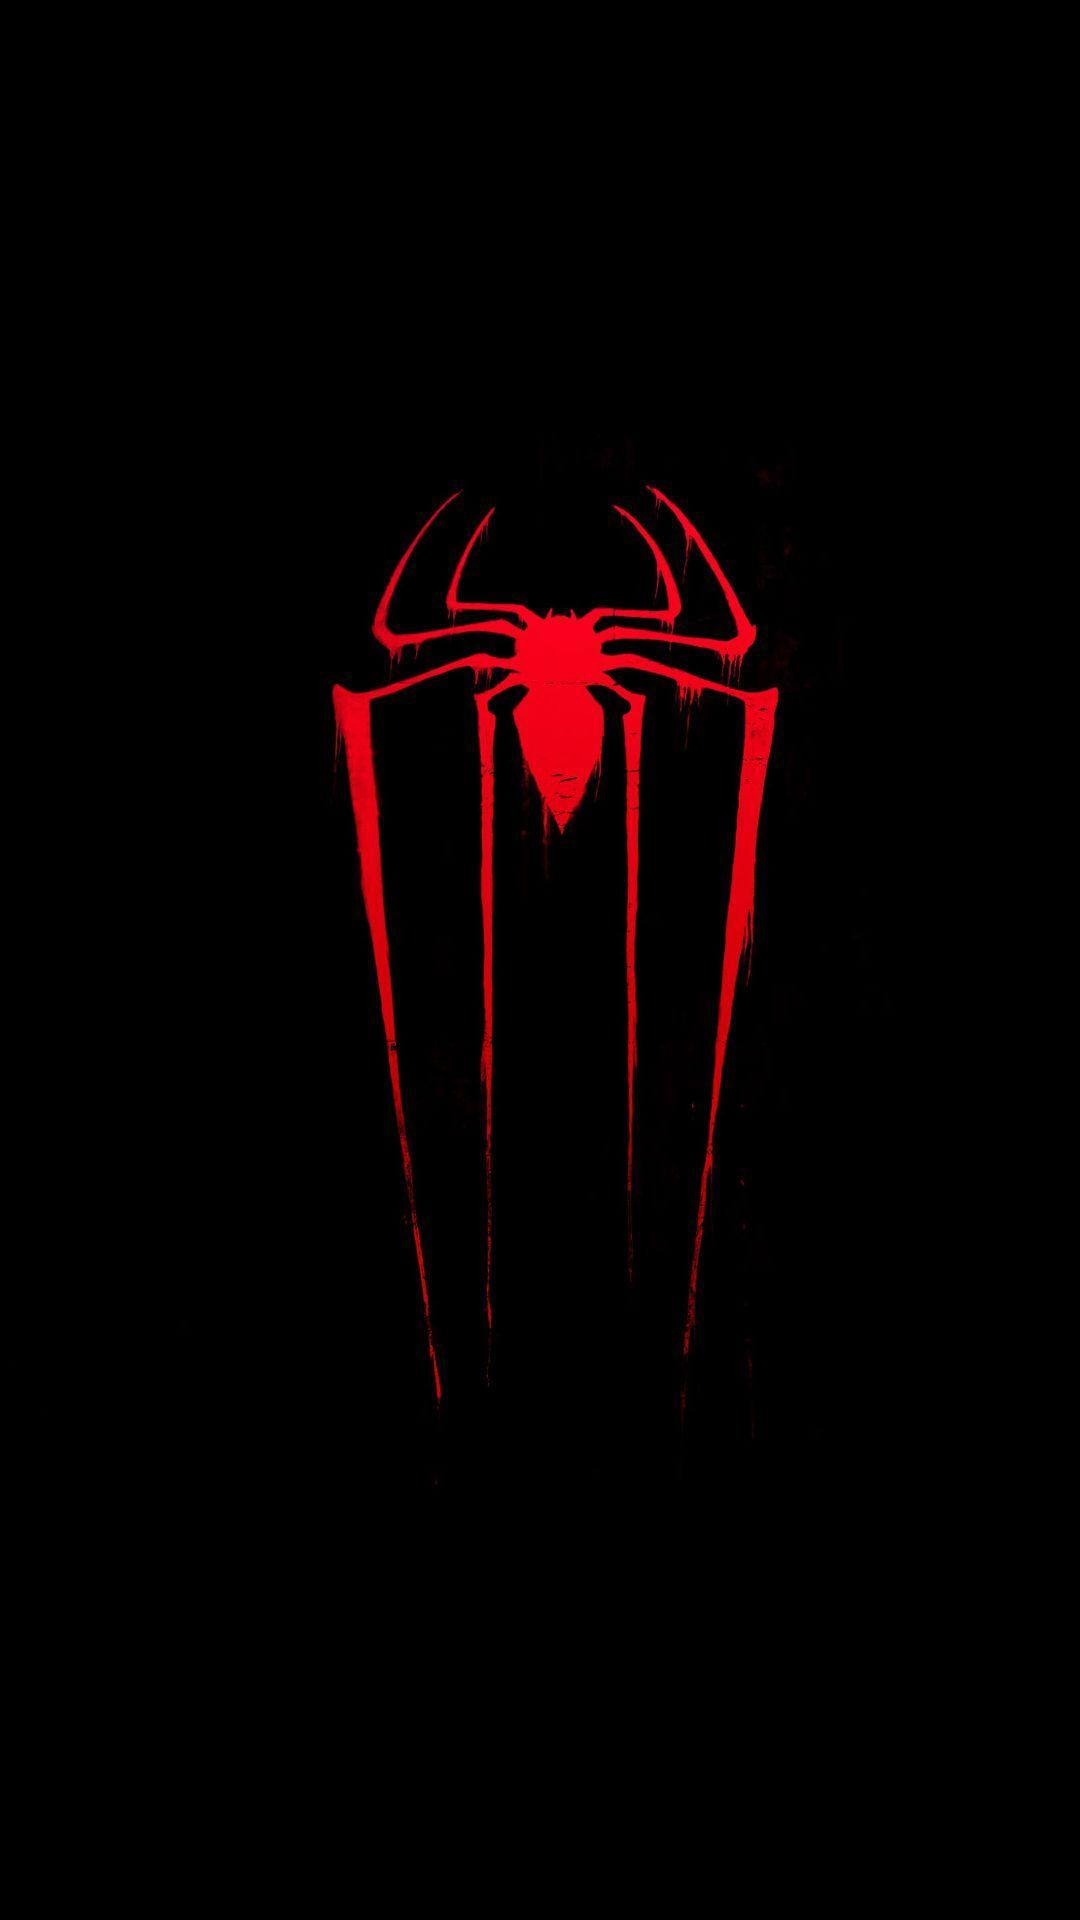 Cool Superhero Logo - Spiderman iPhone6s Wallpaper | Cool Wallpaper! | Spiderman, Amazing ...